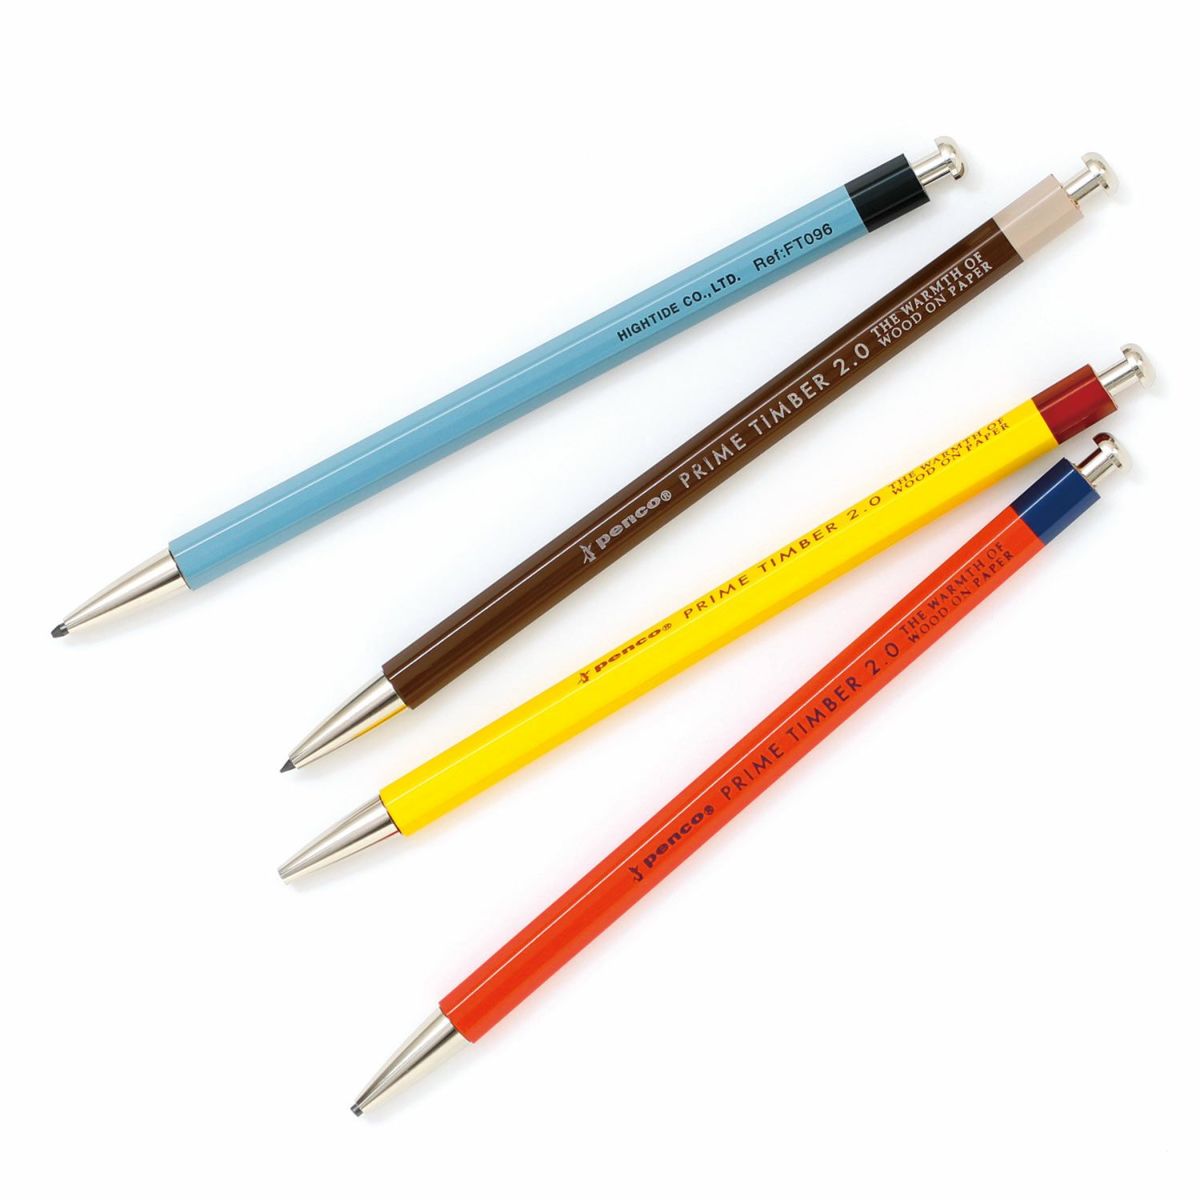 Hightide Penco Prime Timber Pencil 2.0 [Silver Trim]